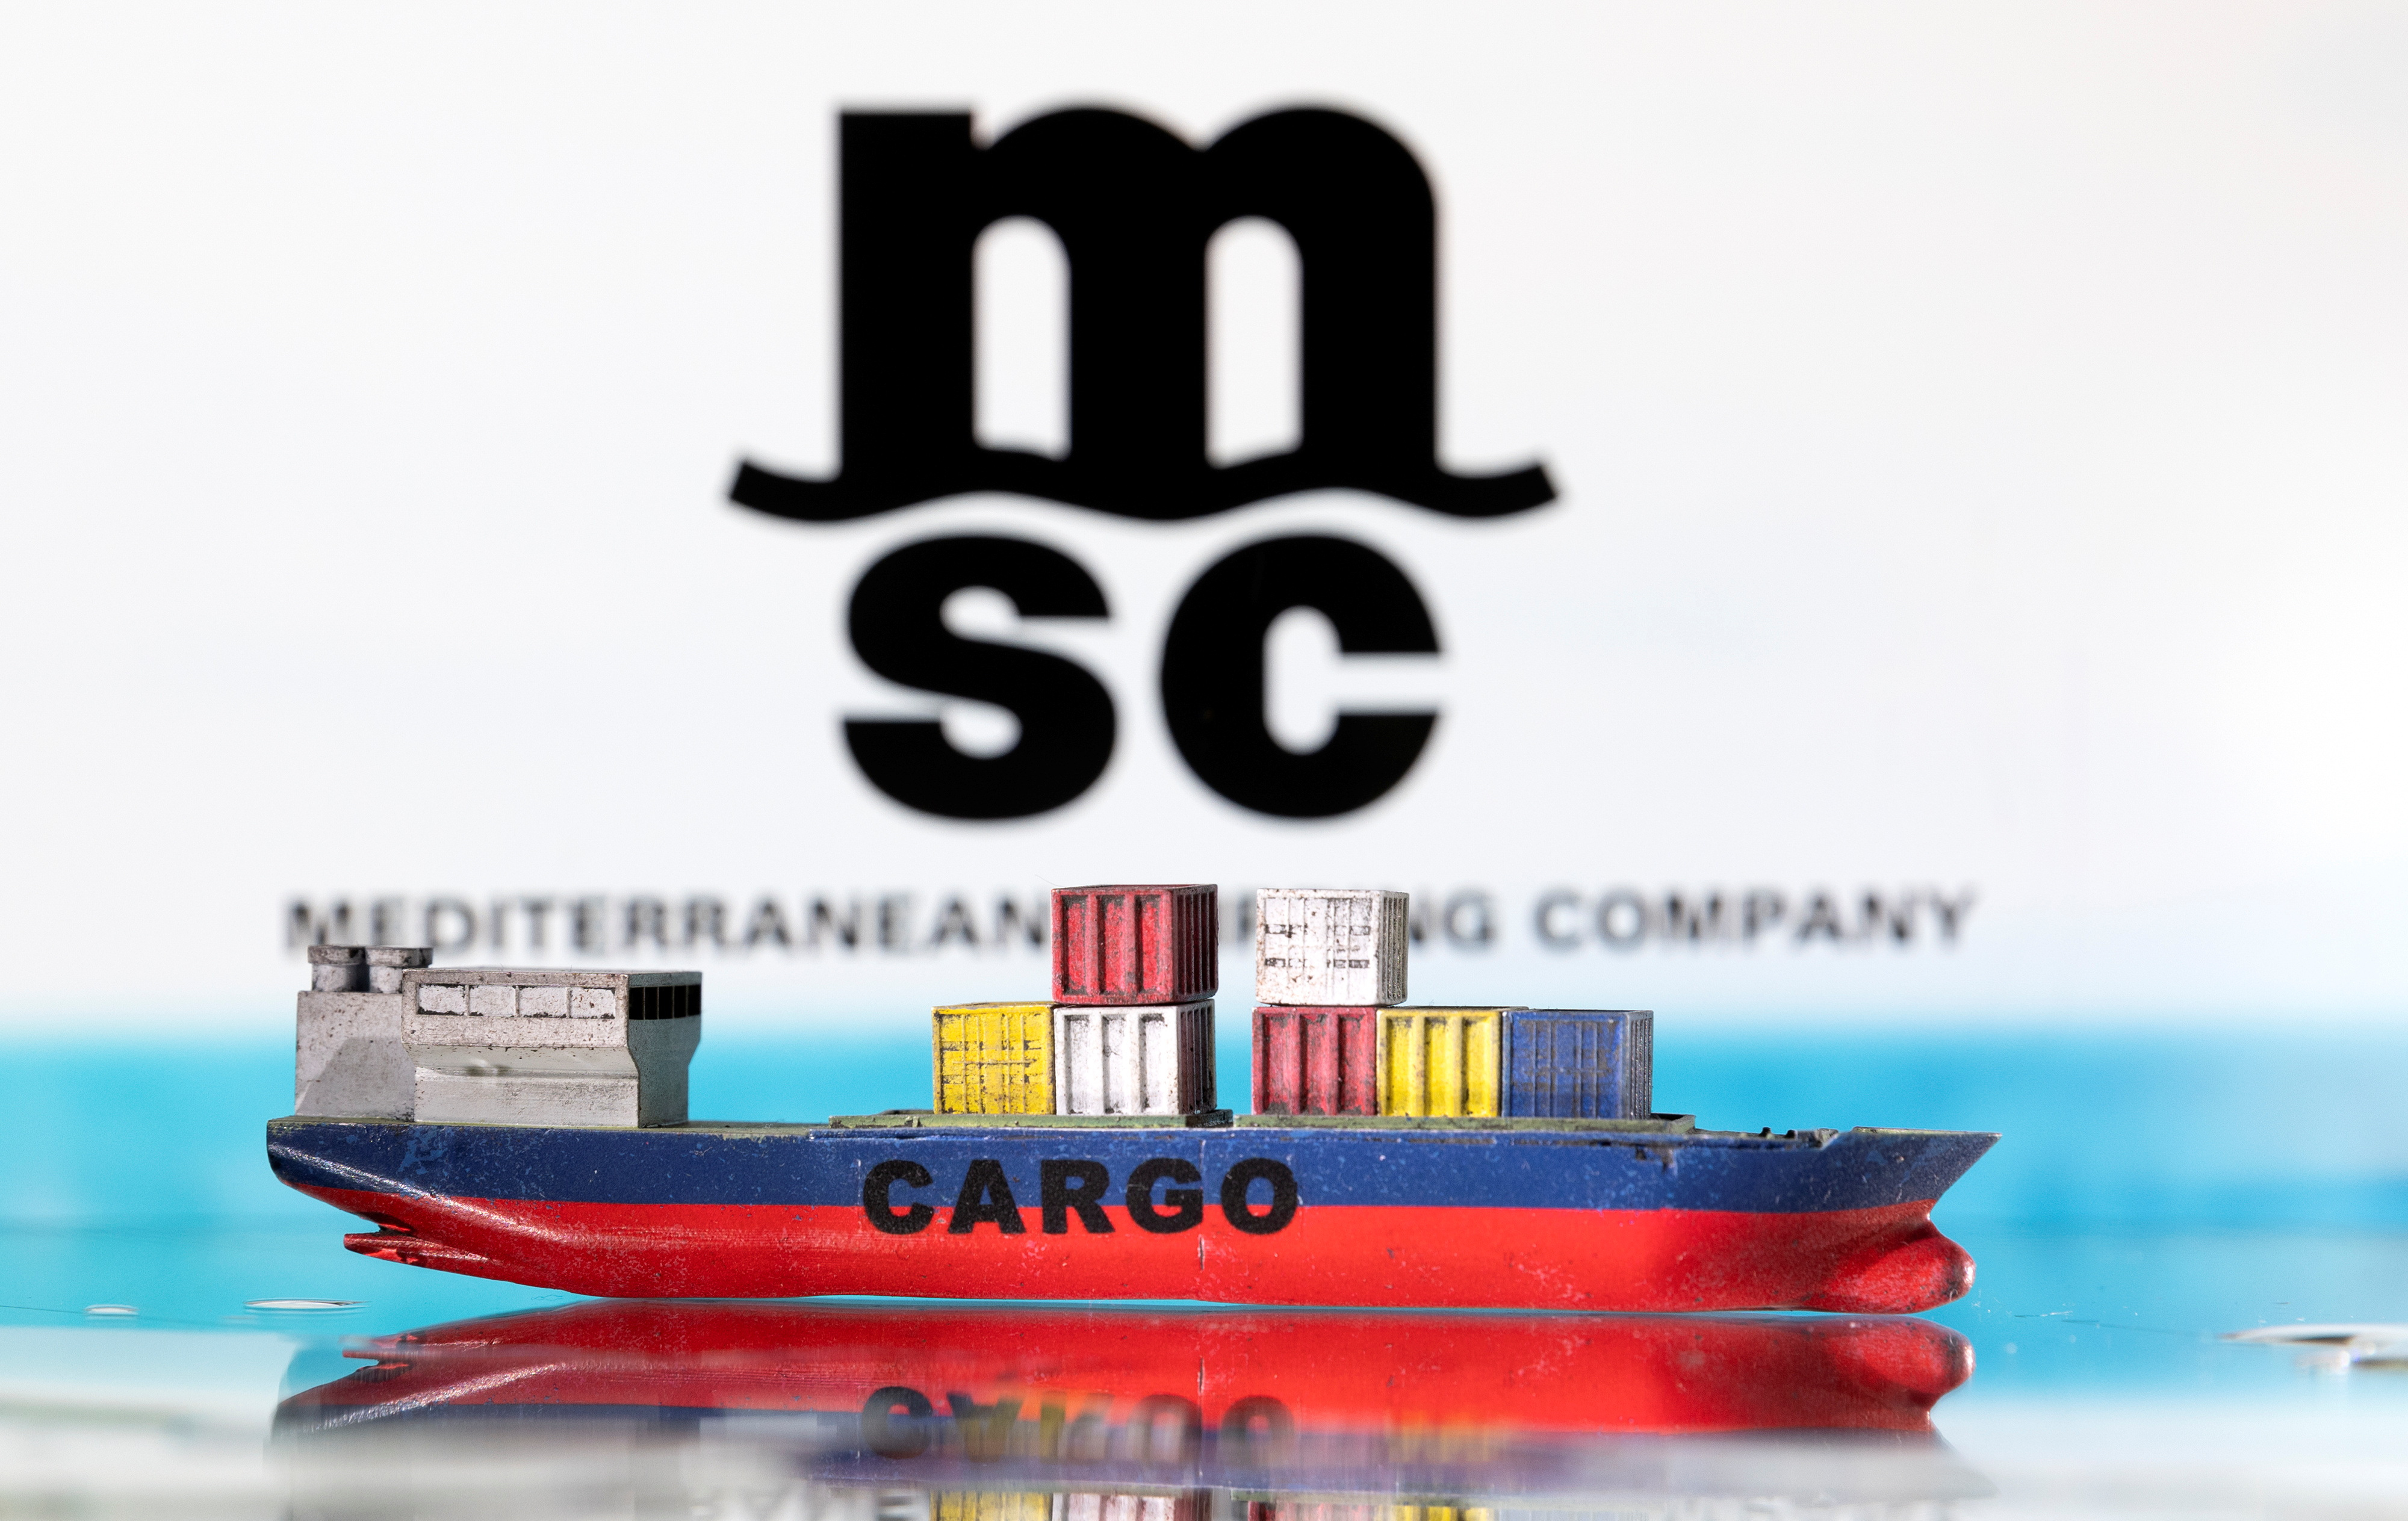 Illustration shows cargo boat model and Mediterranean Shipping Company (MSC) logo